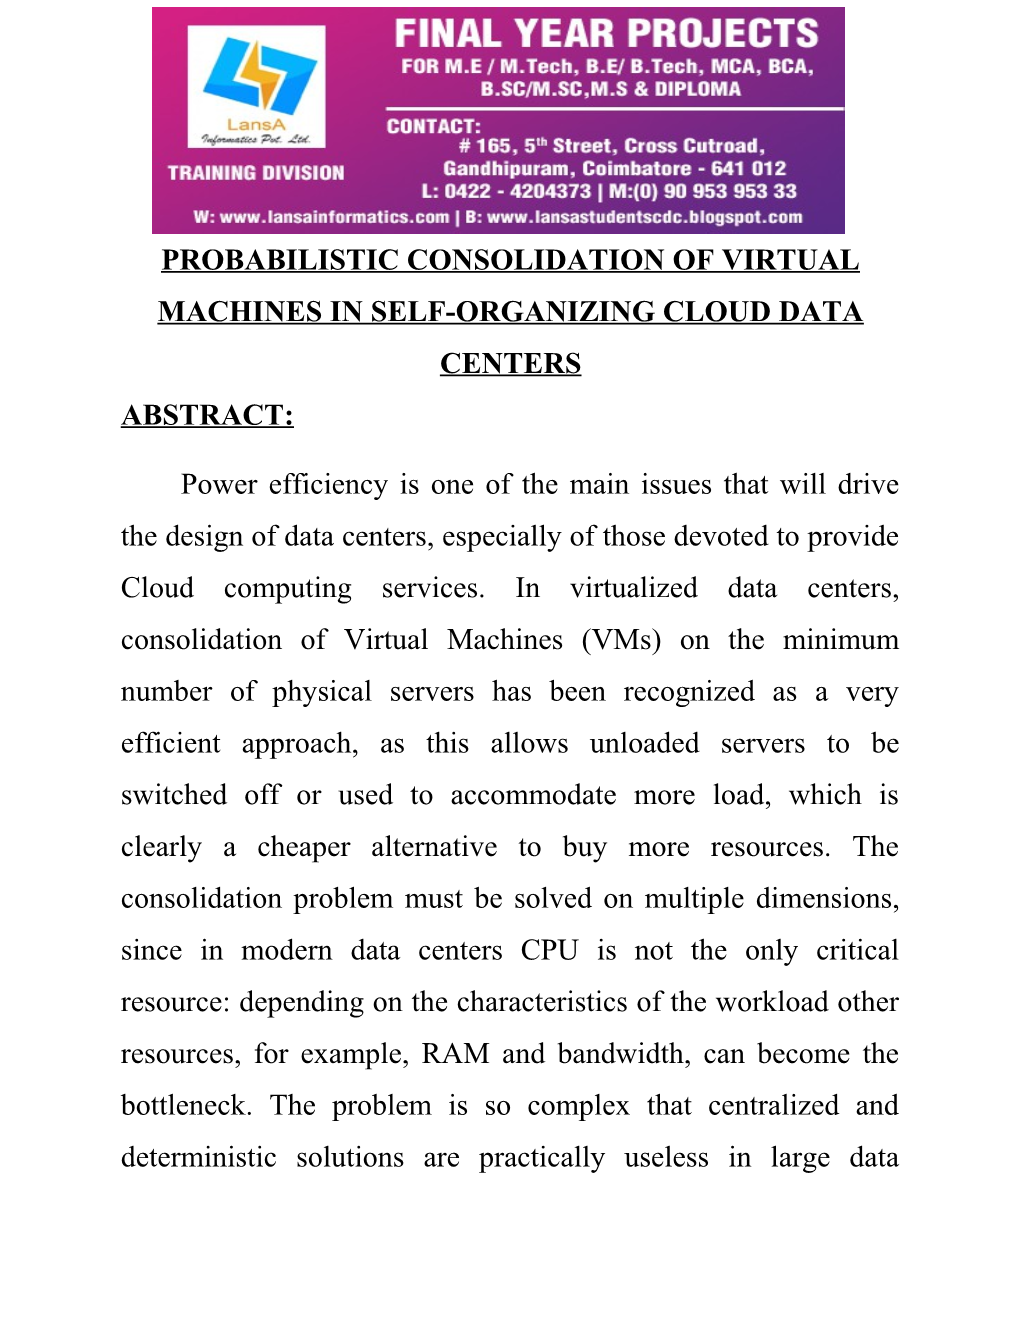 Probabilistic Consolidation of Virtual Machinesin Self-Organizing Cloud Data Centers